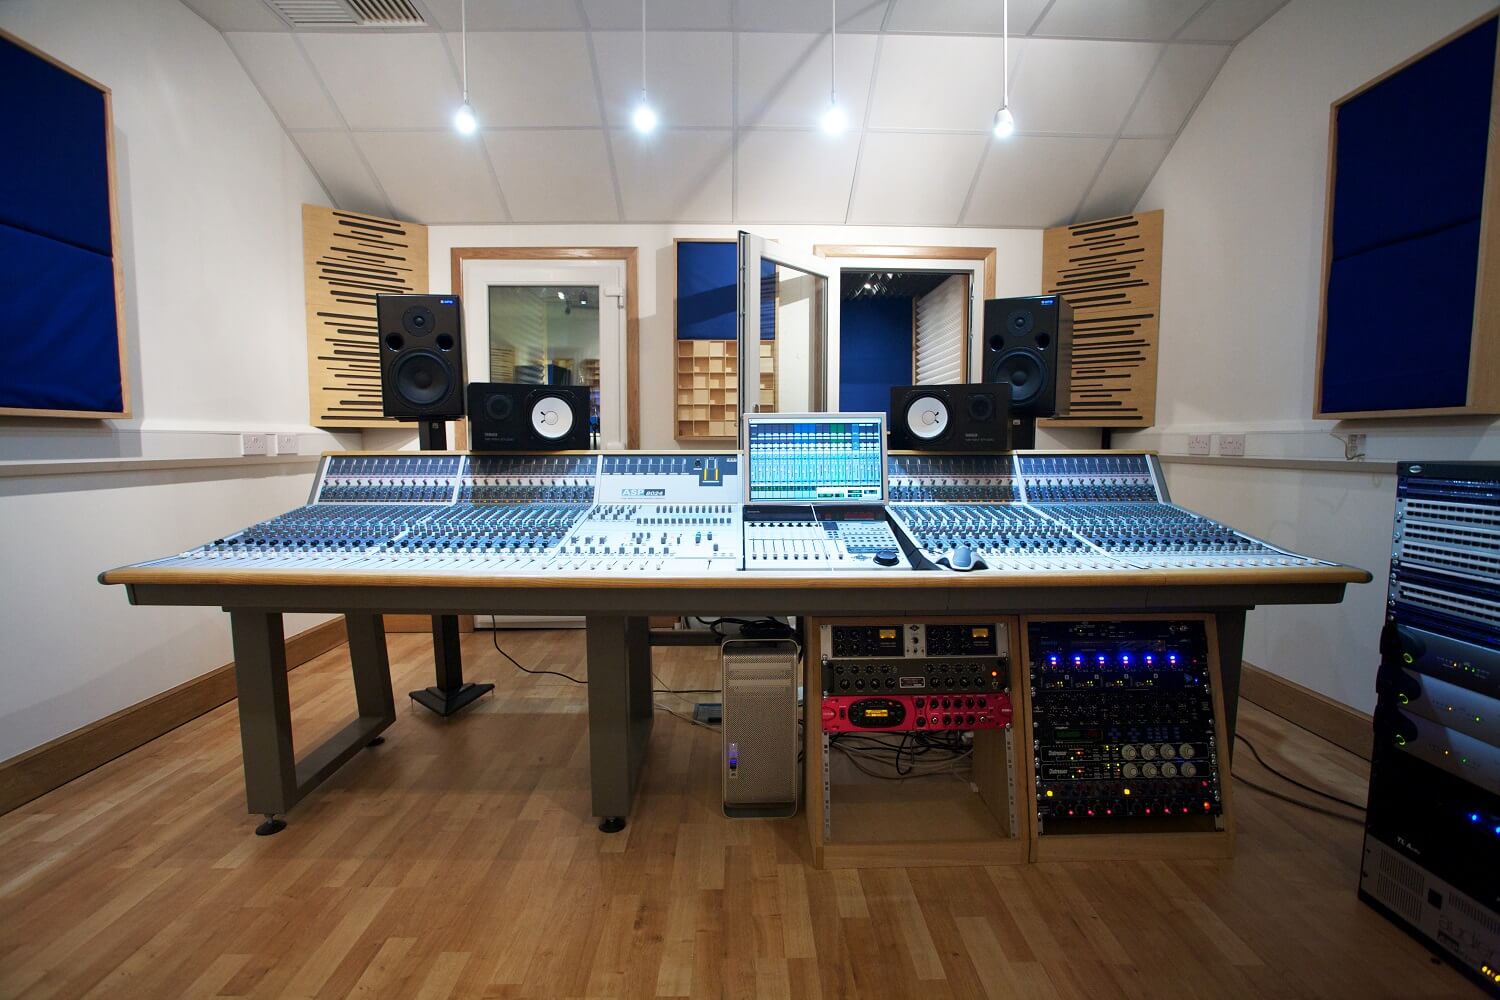 Audient mixing desk in brightly lit studio